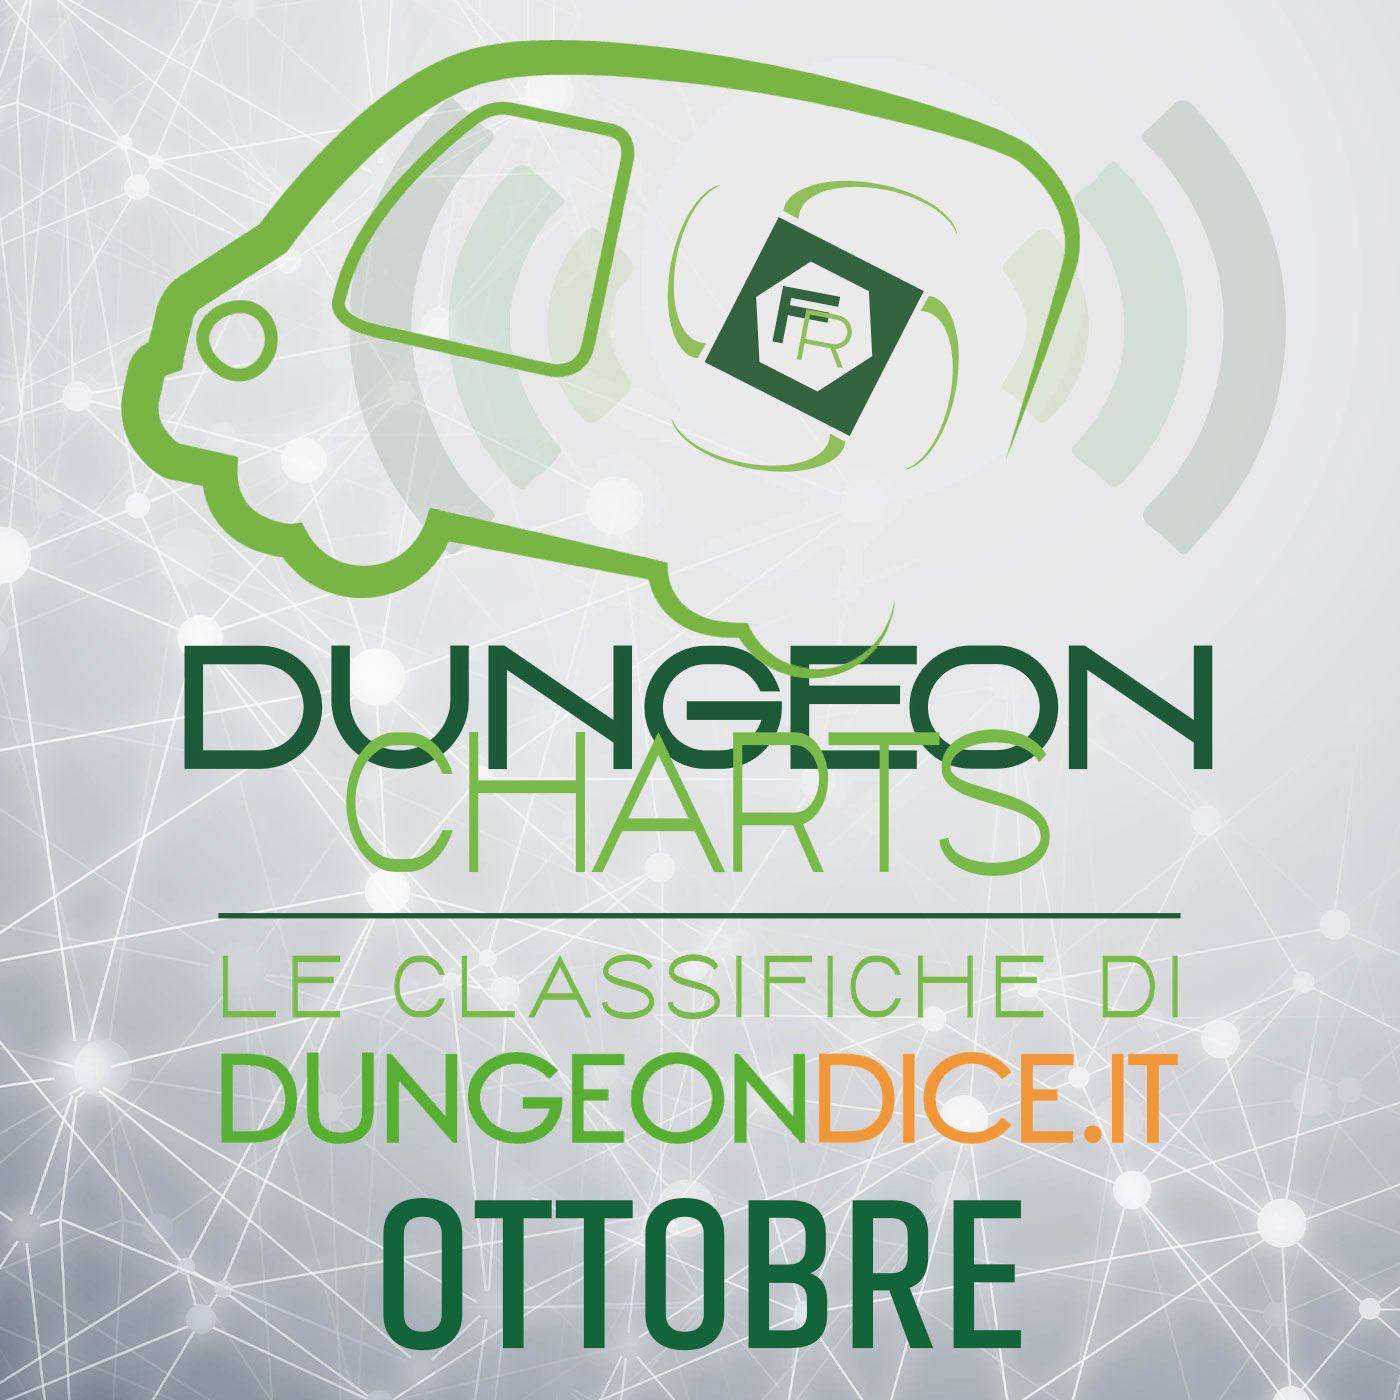 Dungeon Charts - Ottobre 2021